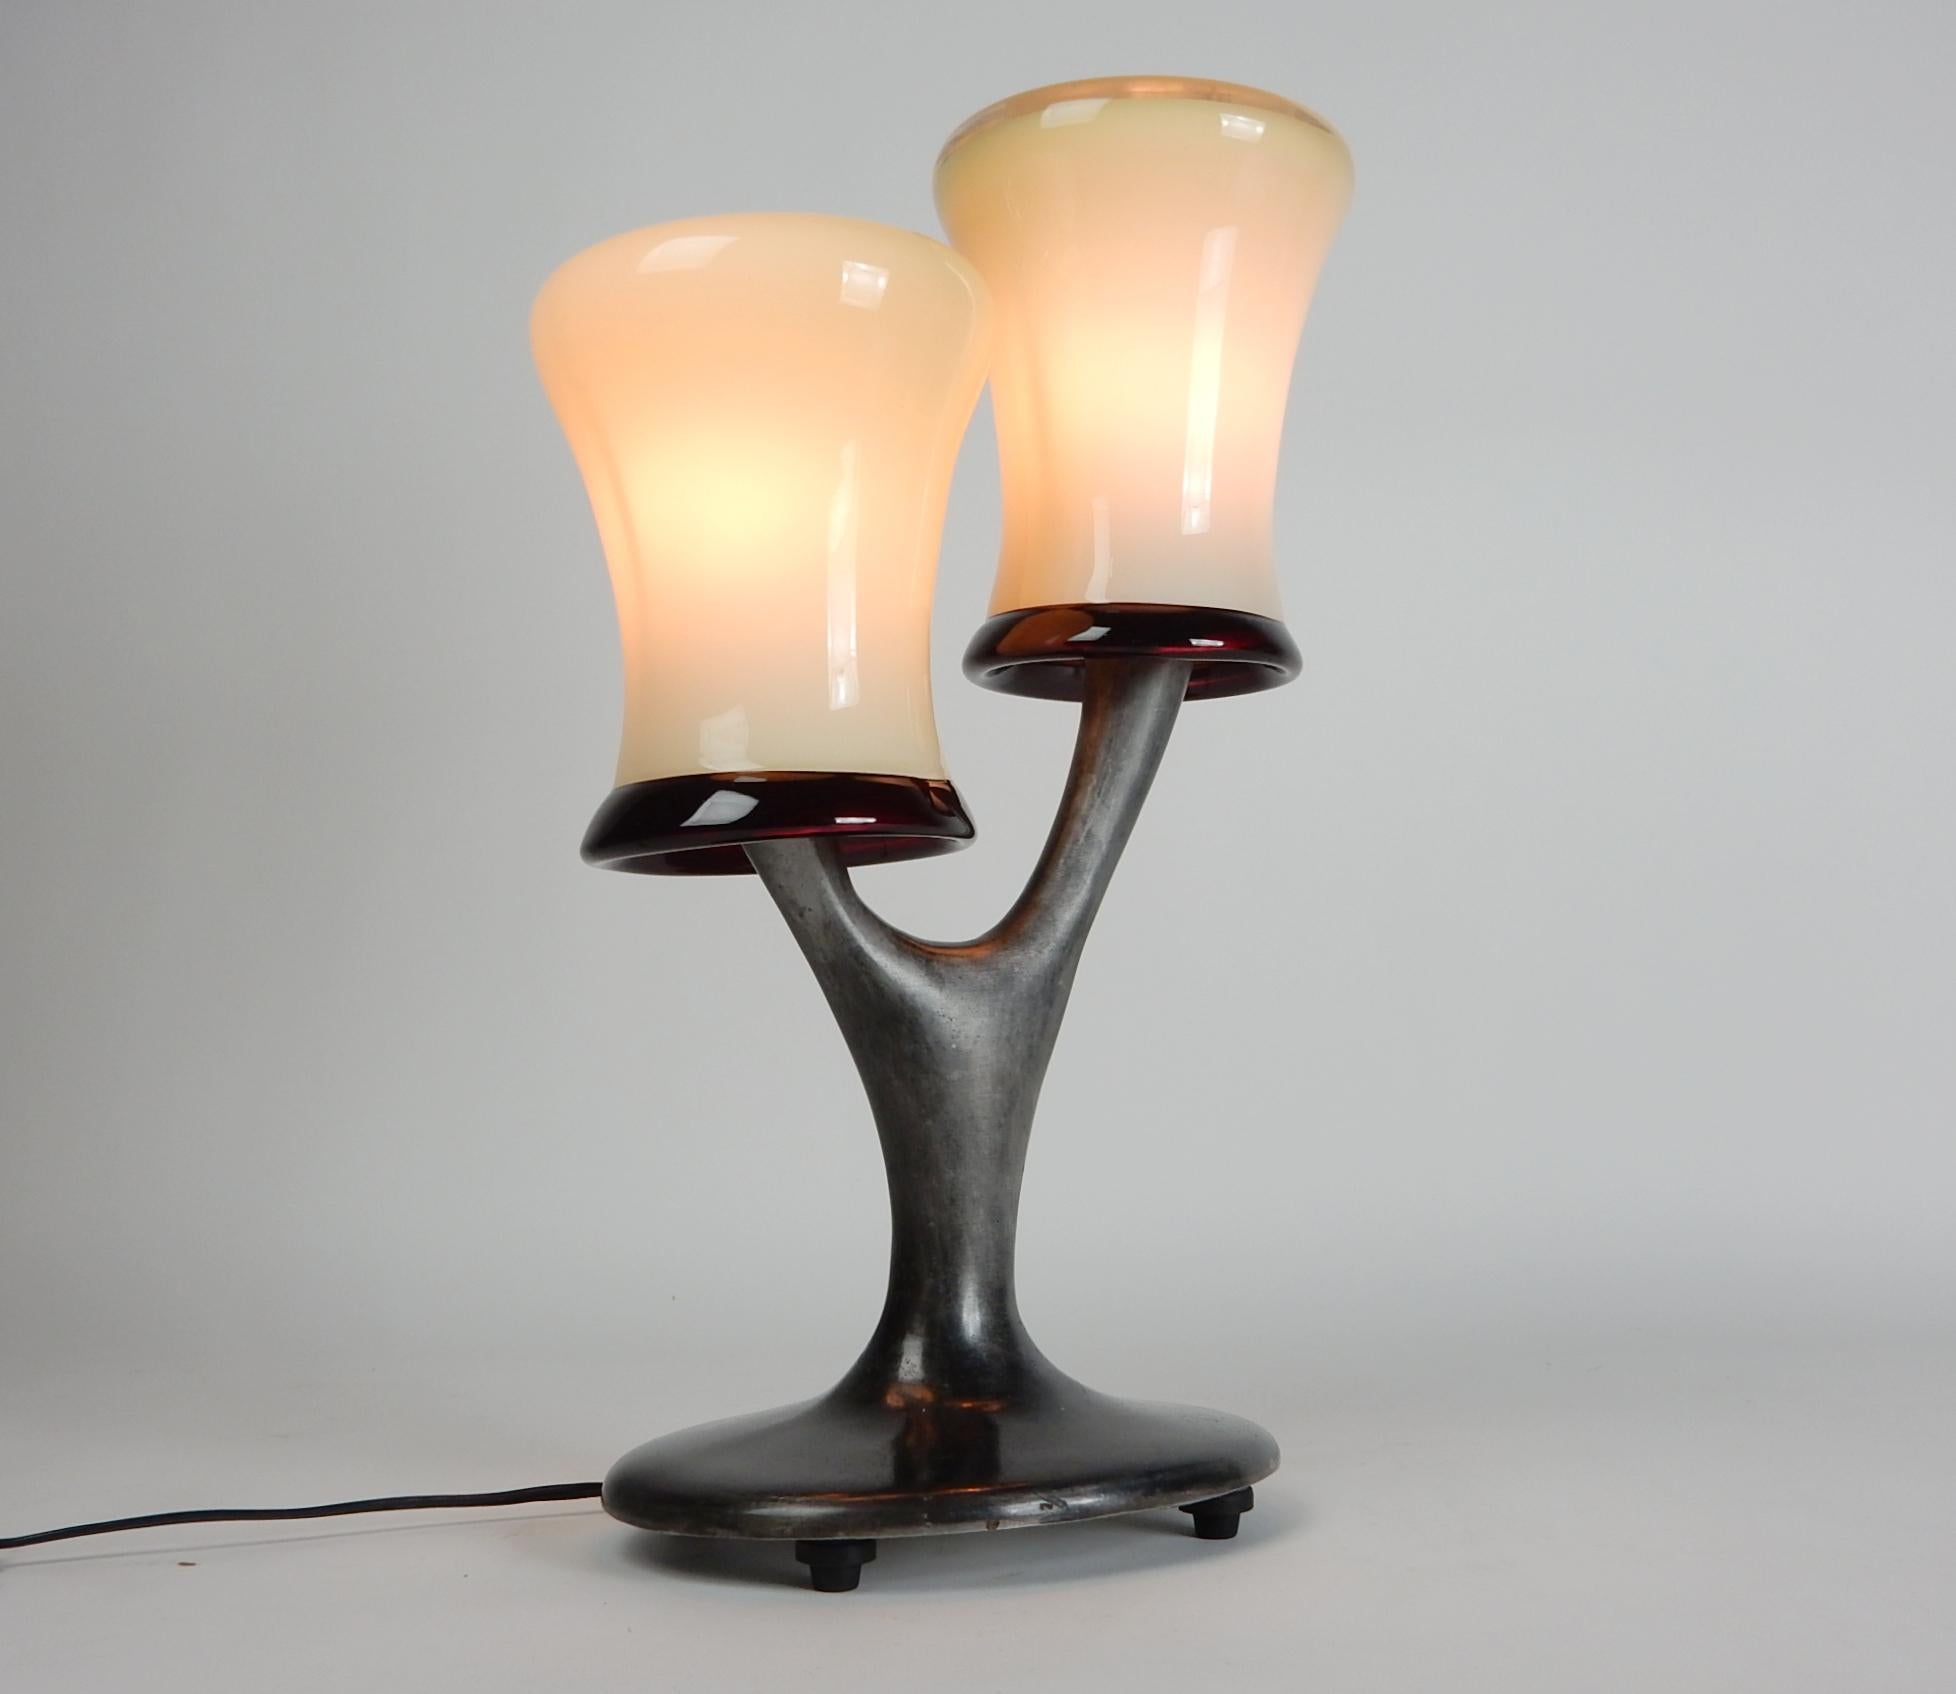 Late 20th Century Twig Twins Lamp by Jordan Mozer for Nectar, Bellagio Hotel